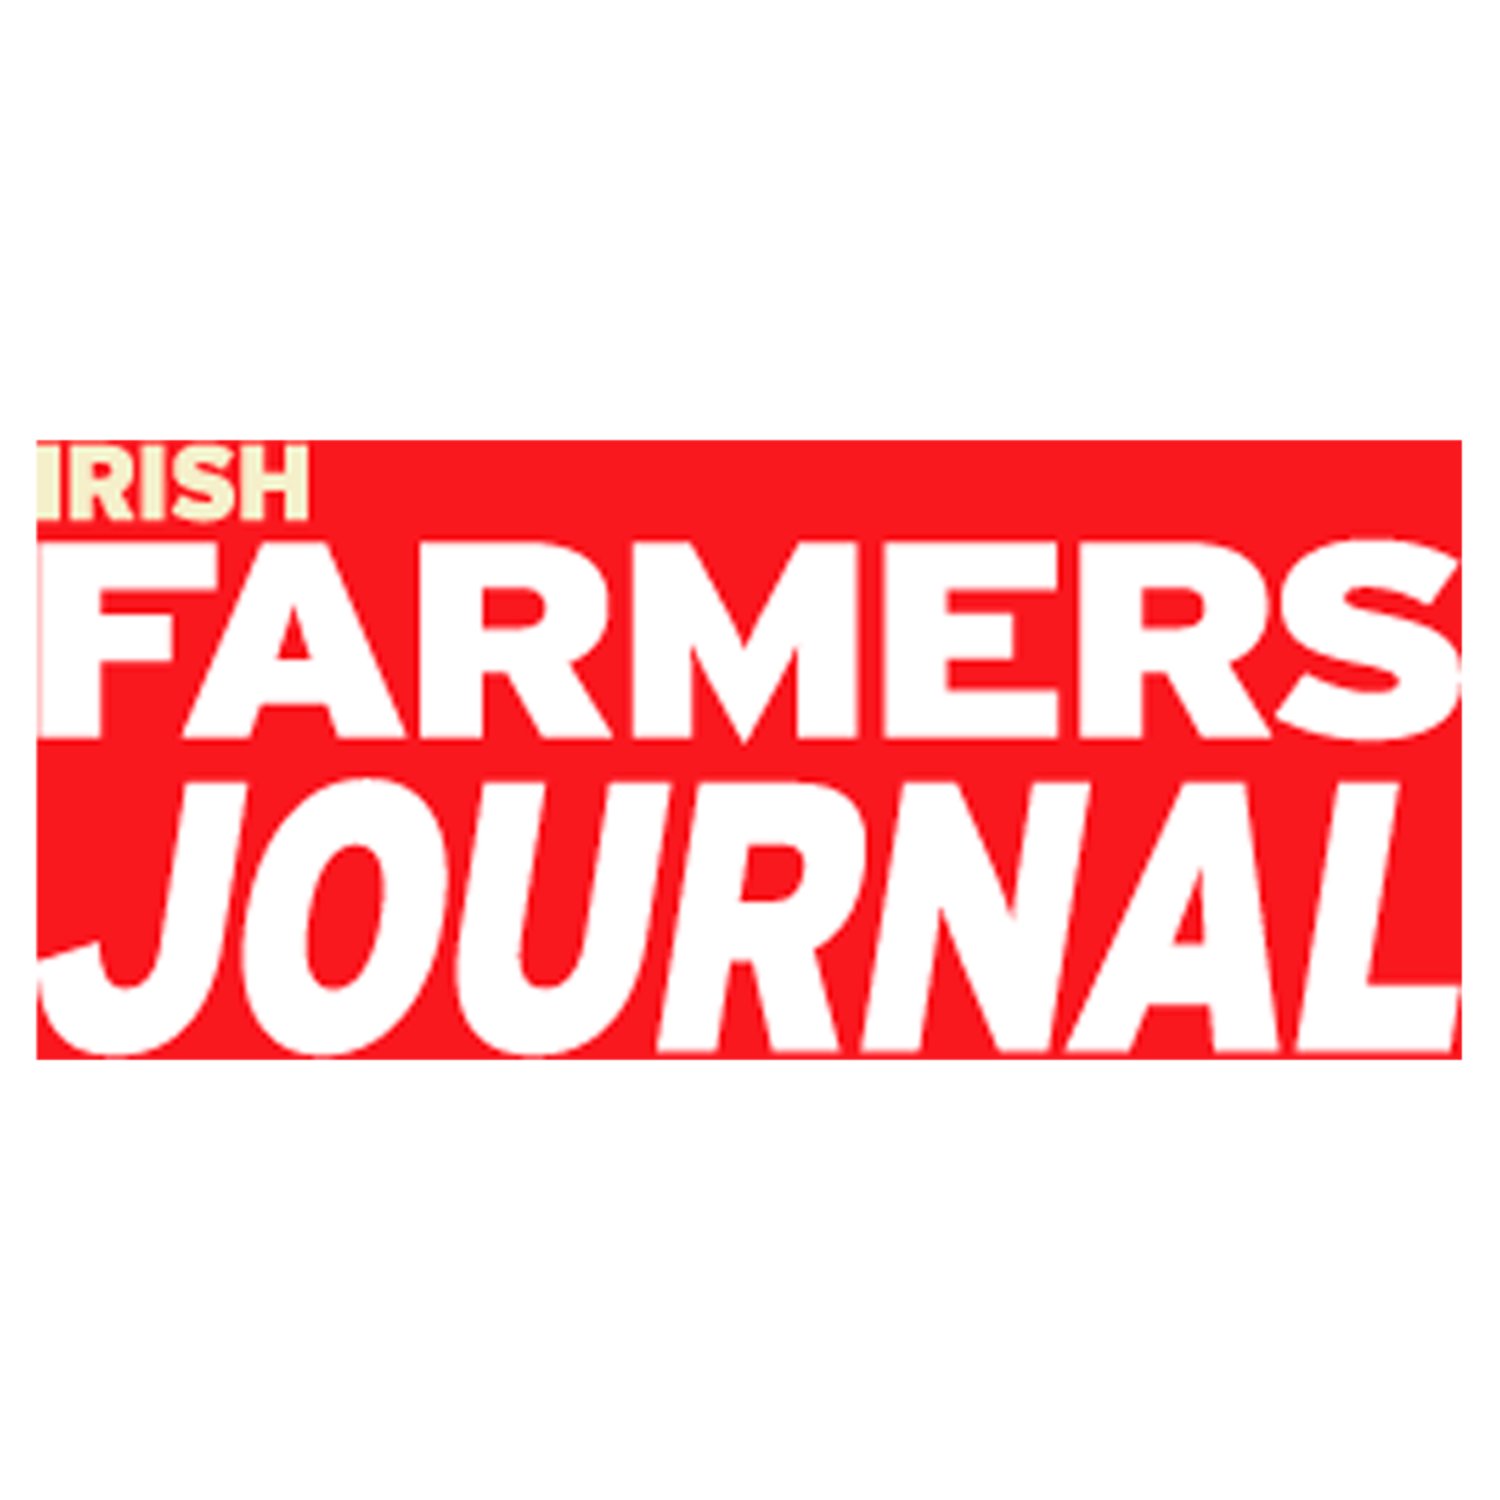 Irish Farmers Journal (1 Piece)